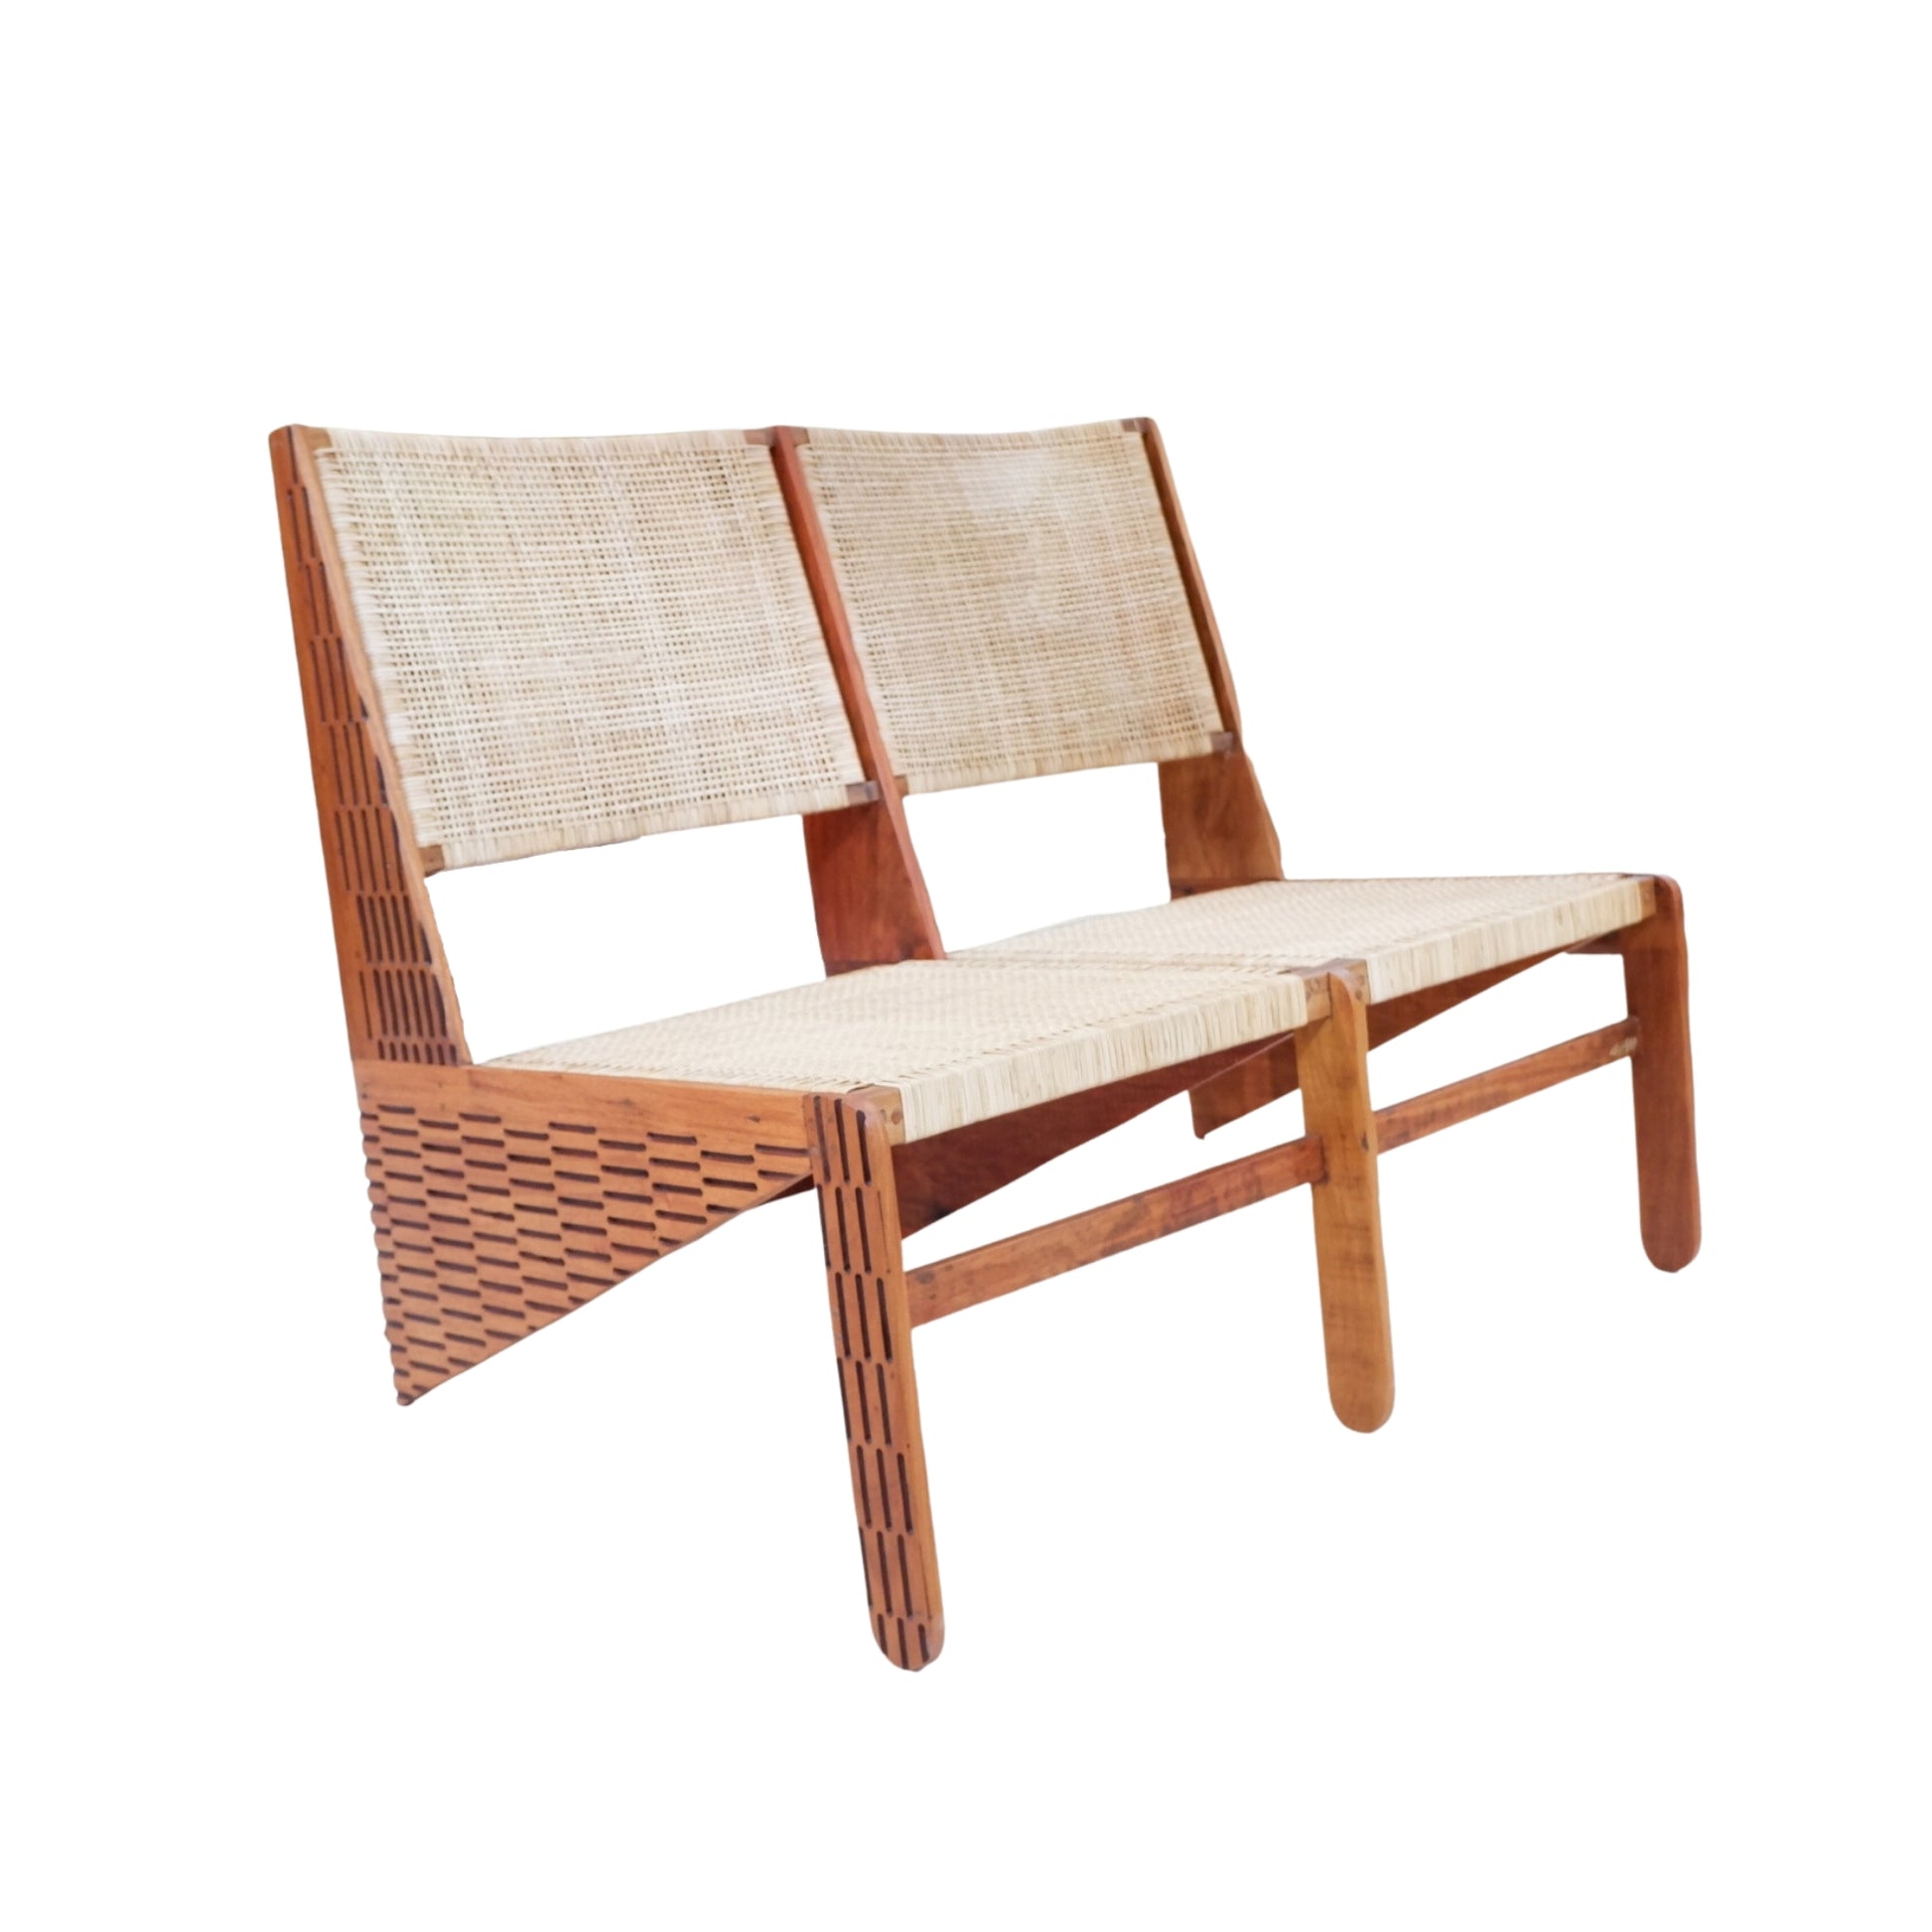 Wood Seat